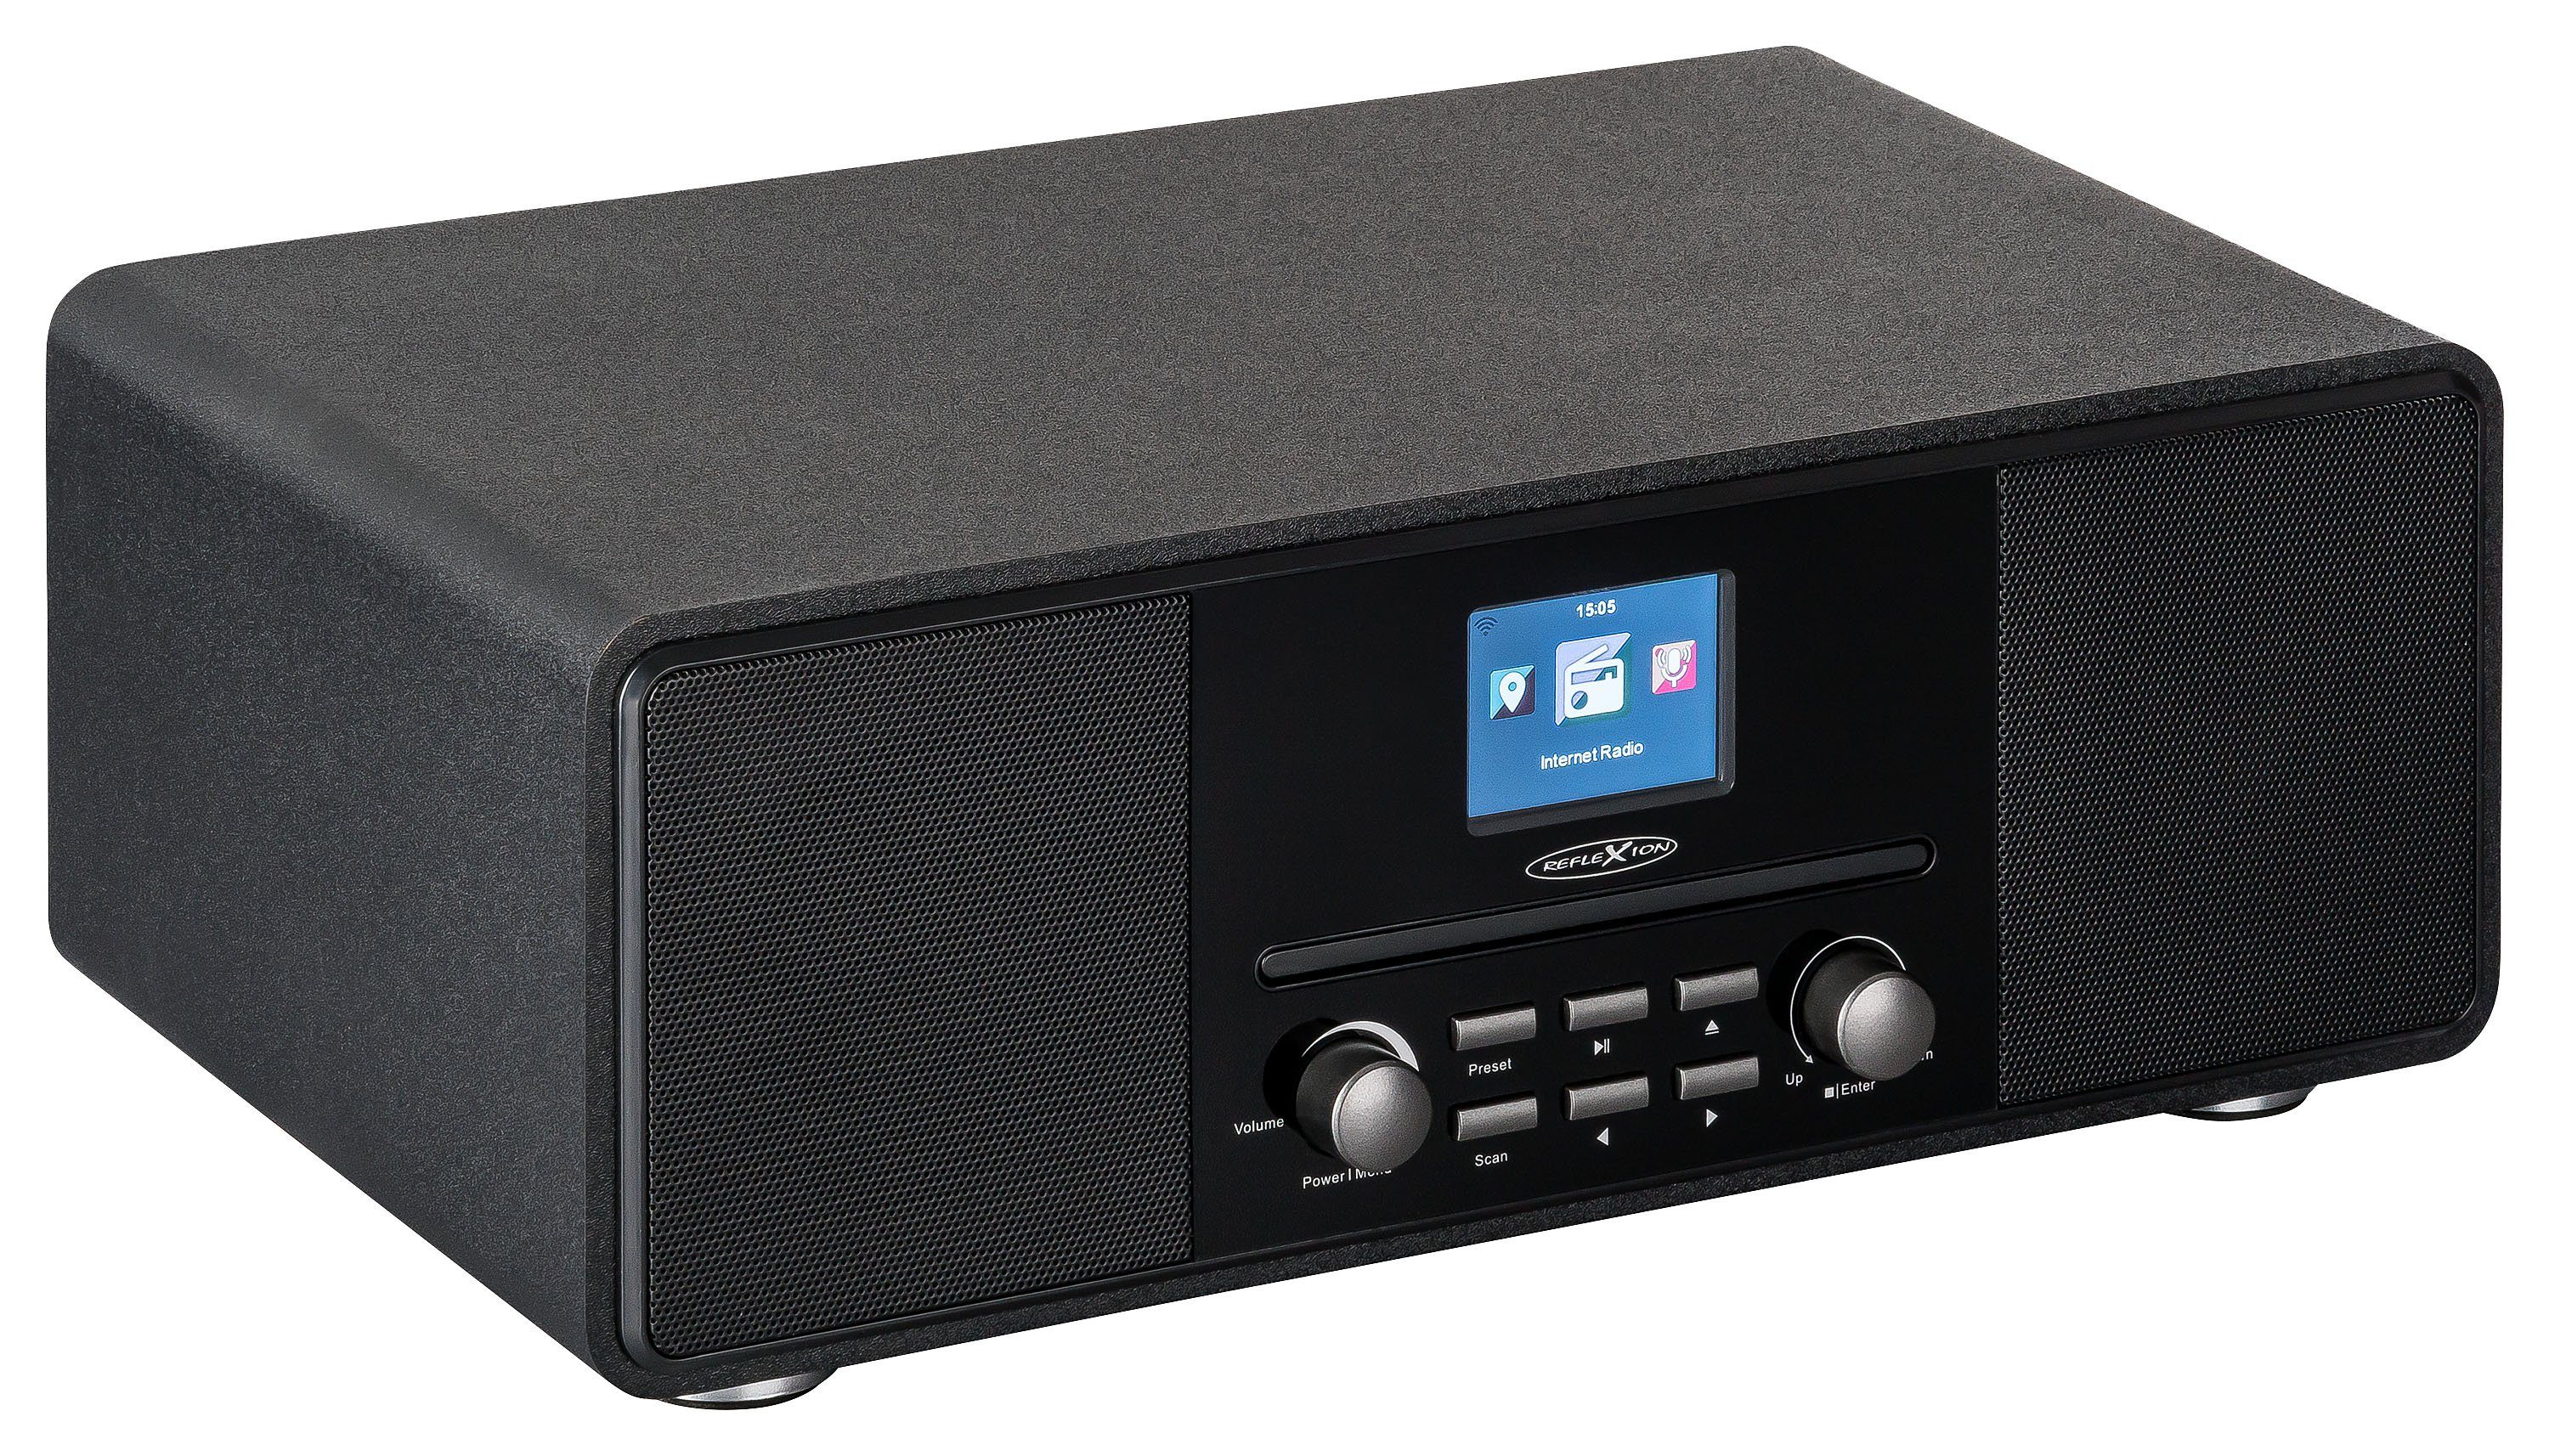 schwarz Farbdisplay, Bluetooth, 160 WLAN) Internet-Radio Reflexion 2,4" TFT AUX-IN, W, Kopfhöreranschluss, (Digitalradio (DAB), HRA19INT